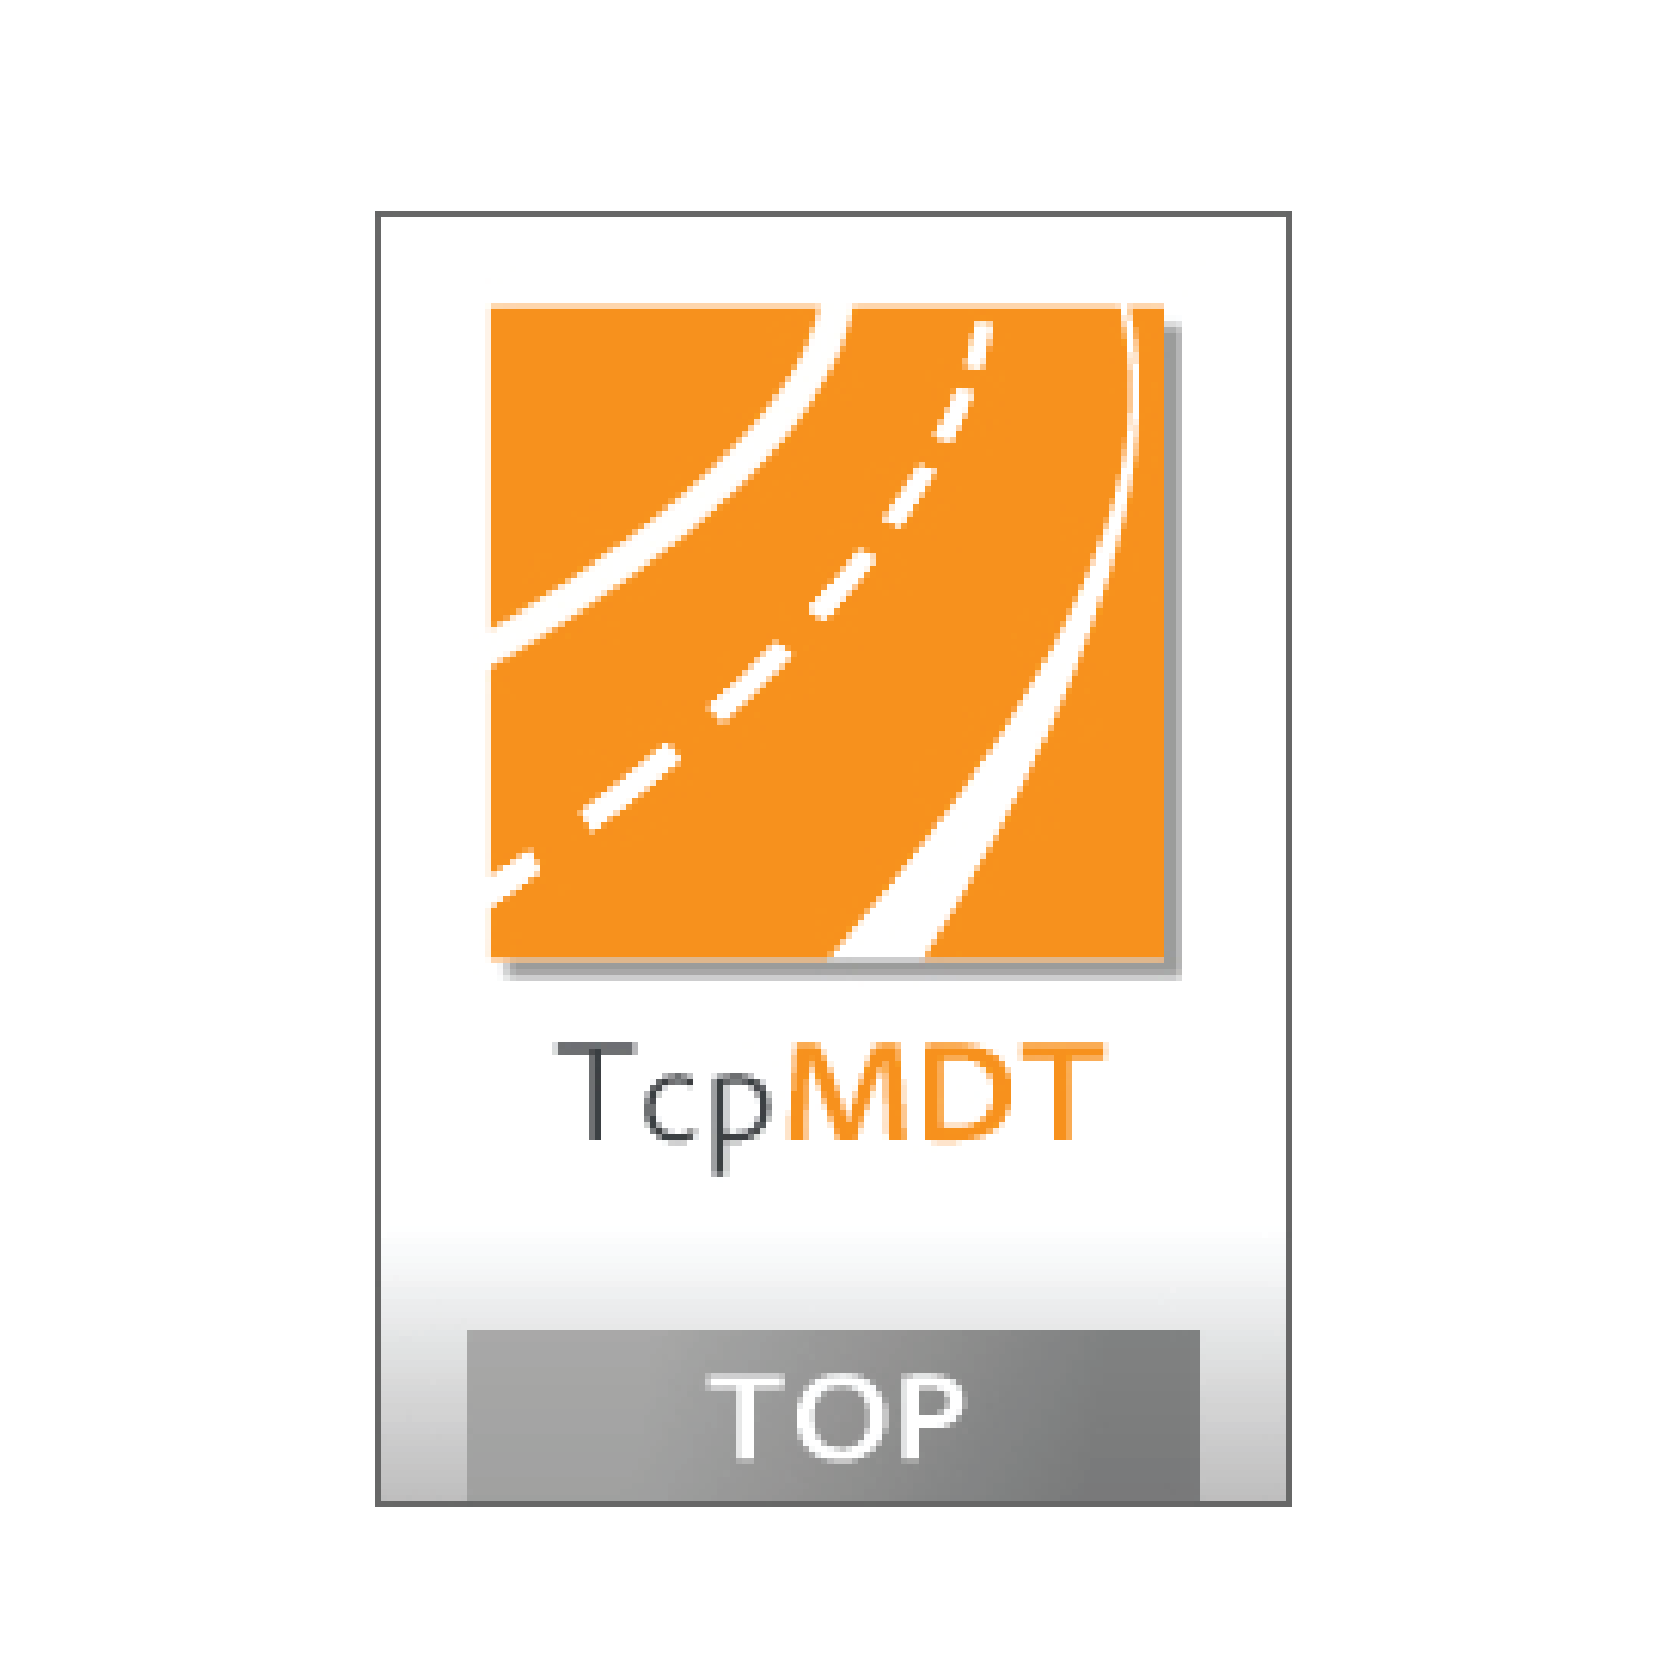 Aplitop MDT Estandar-01